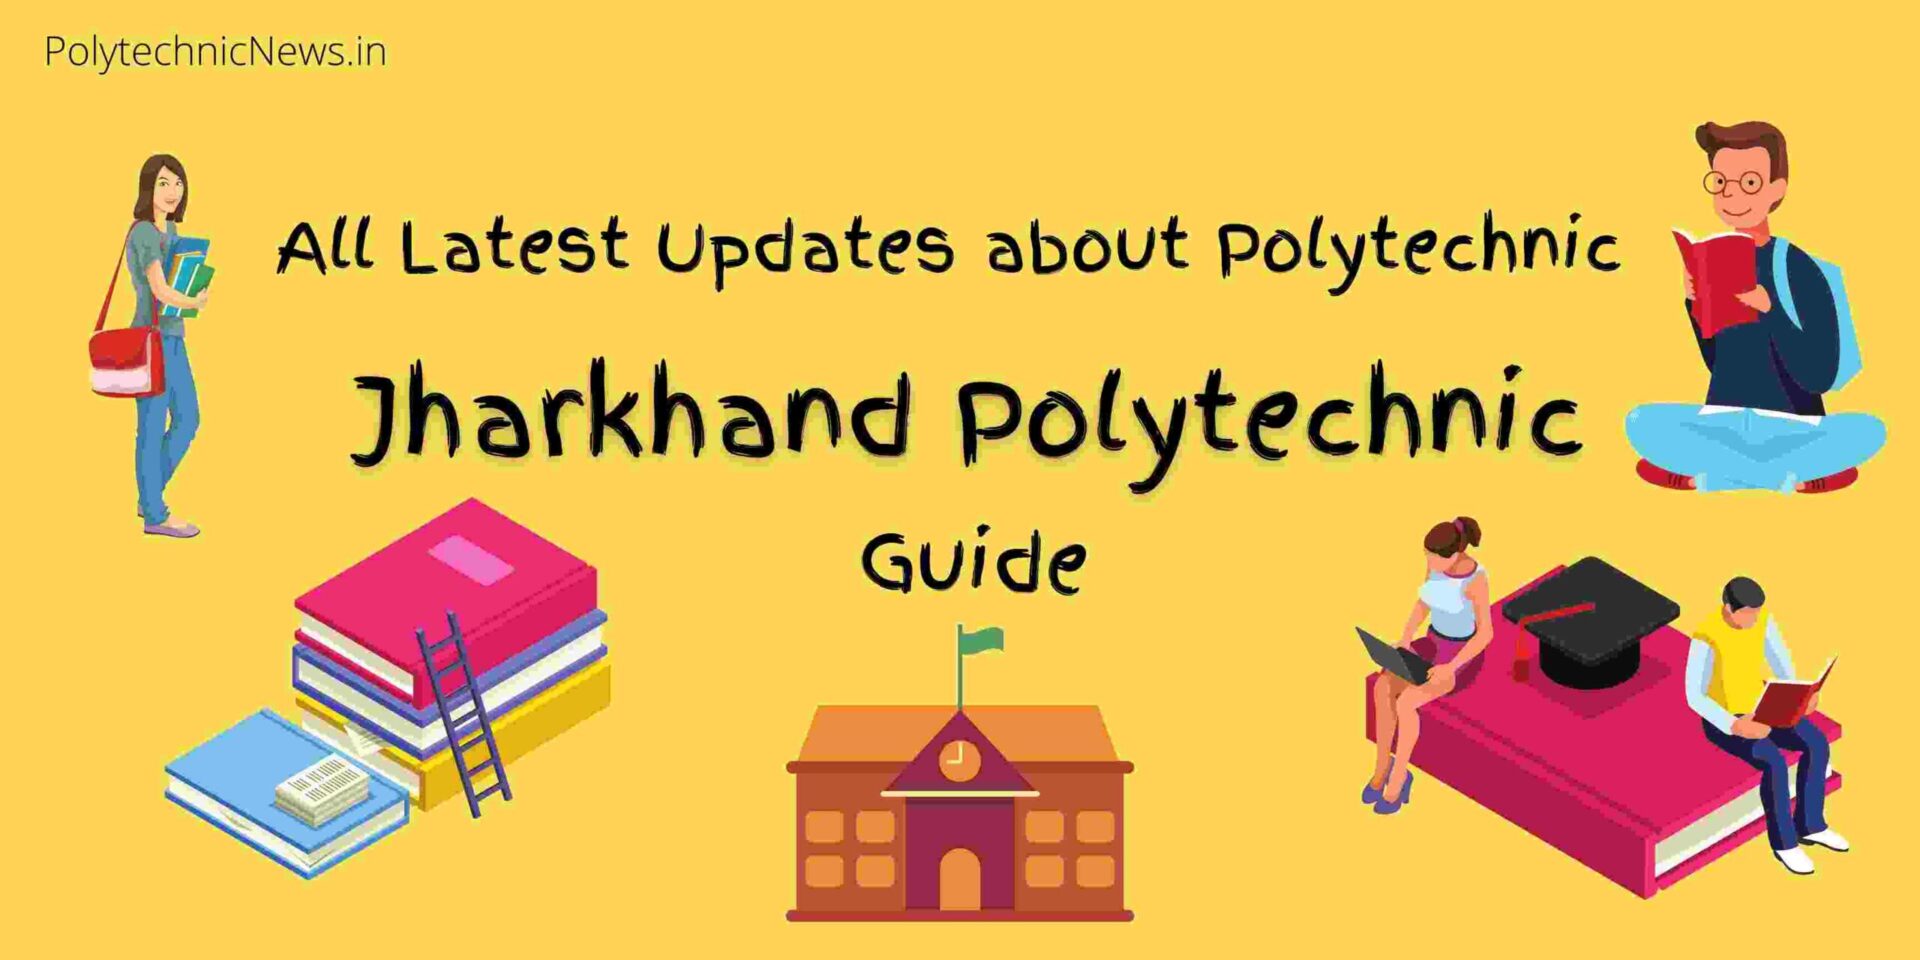 Jharkhand Polytechnic